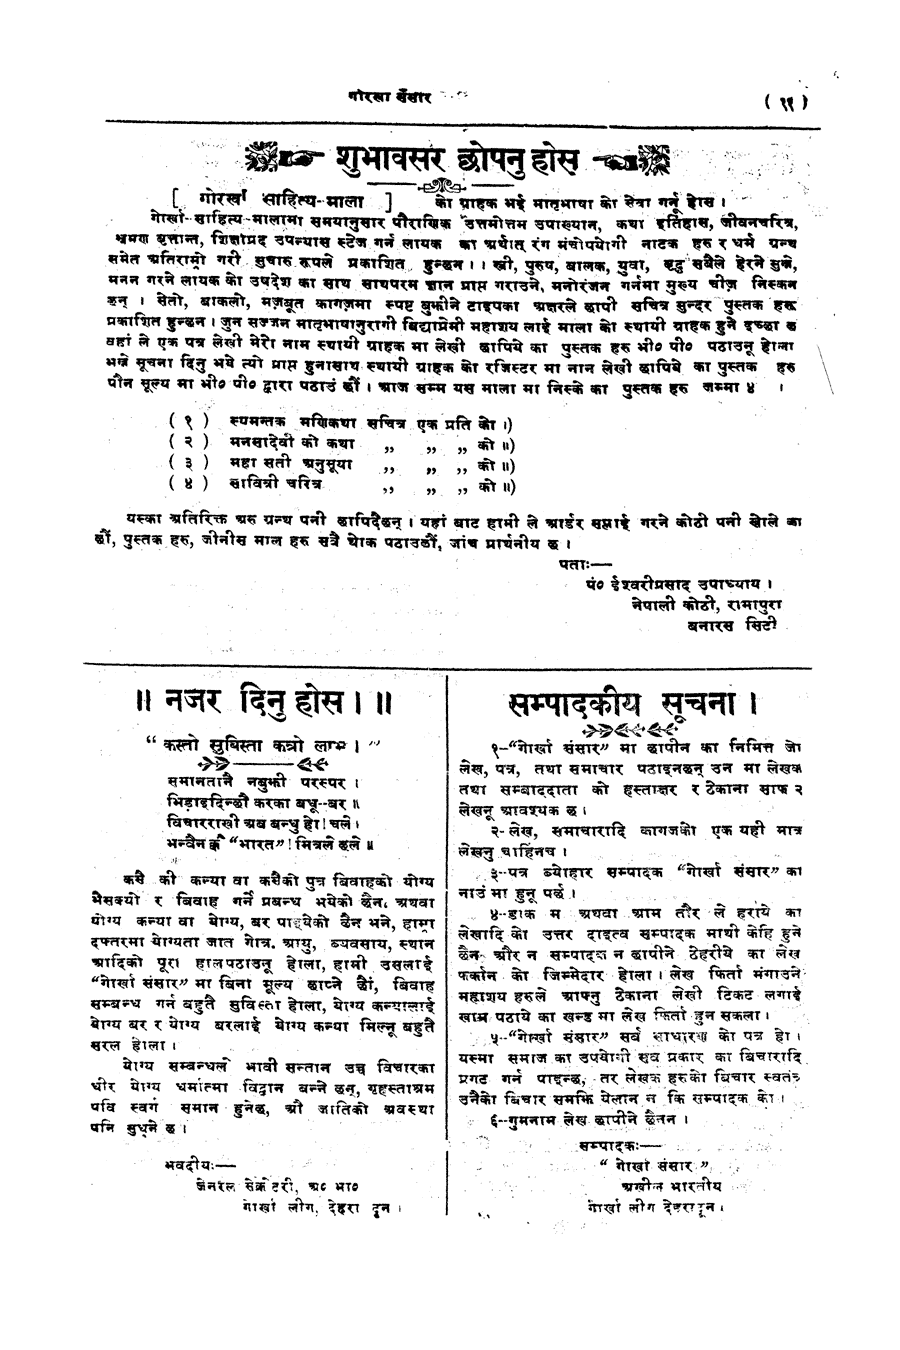 Gorkha Sansar, 22 June 1928, page 11